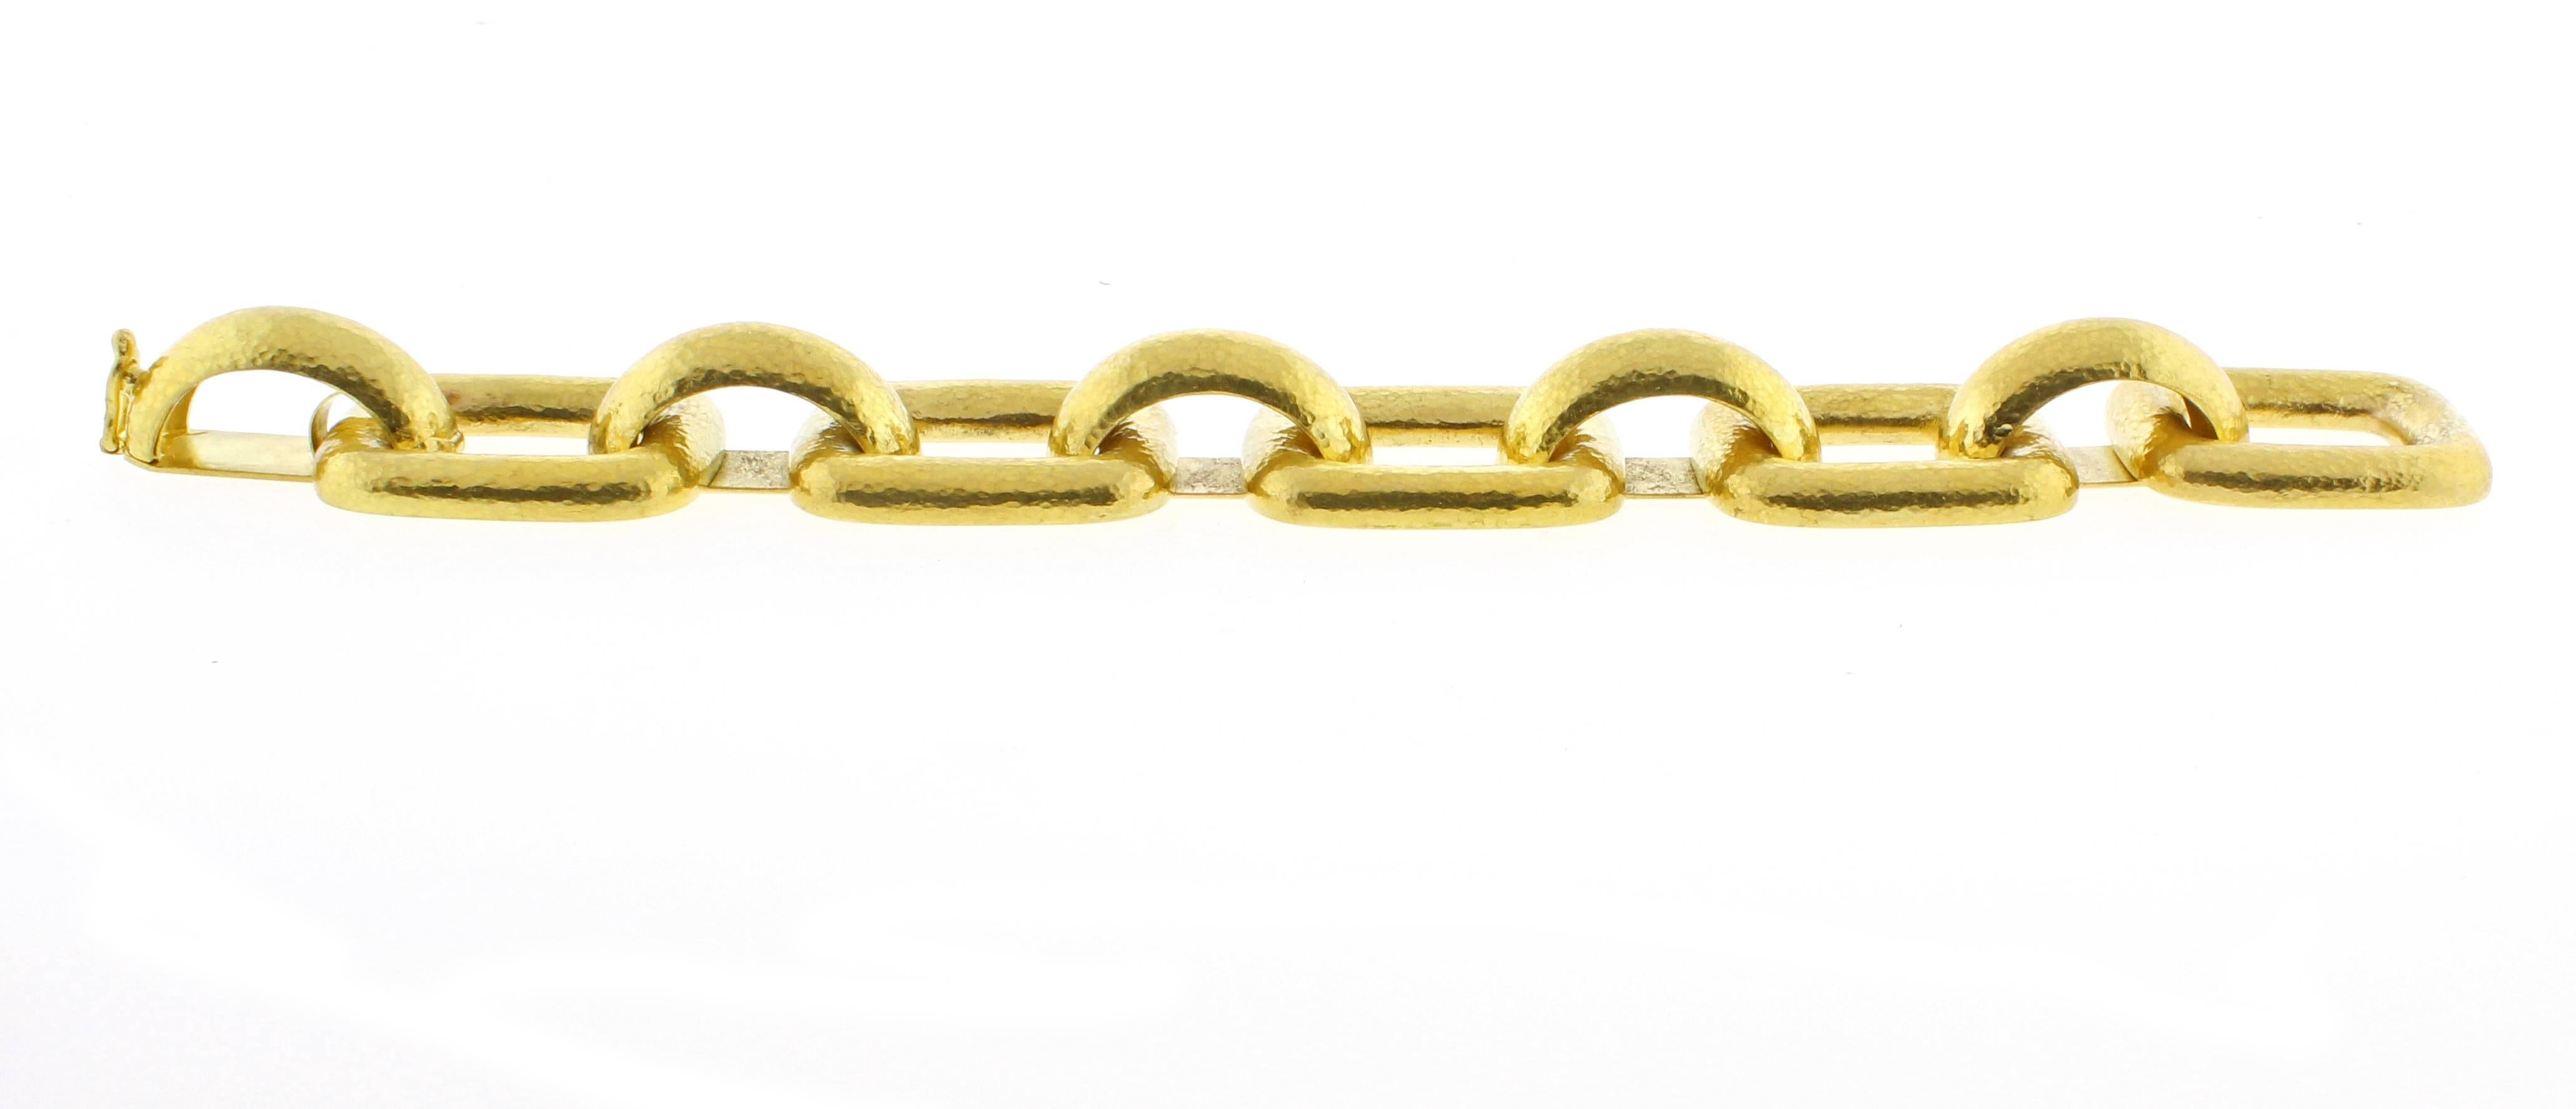 From acclaimed designed Elizabeth Locke the Livorno link Bracelet. Large  hammered rectangular links are joined together to make a bold statement.
Each link measures 32 X 28mm. 19 karat, 7 1/2 inches
